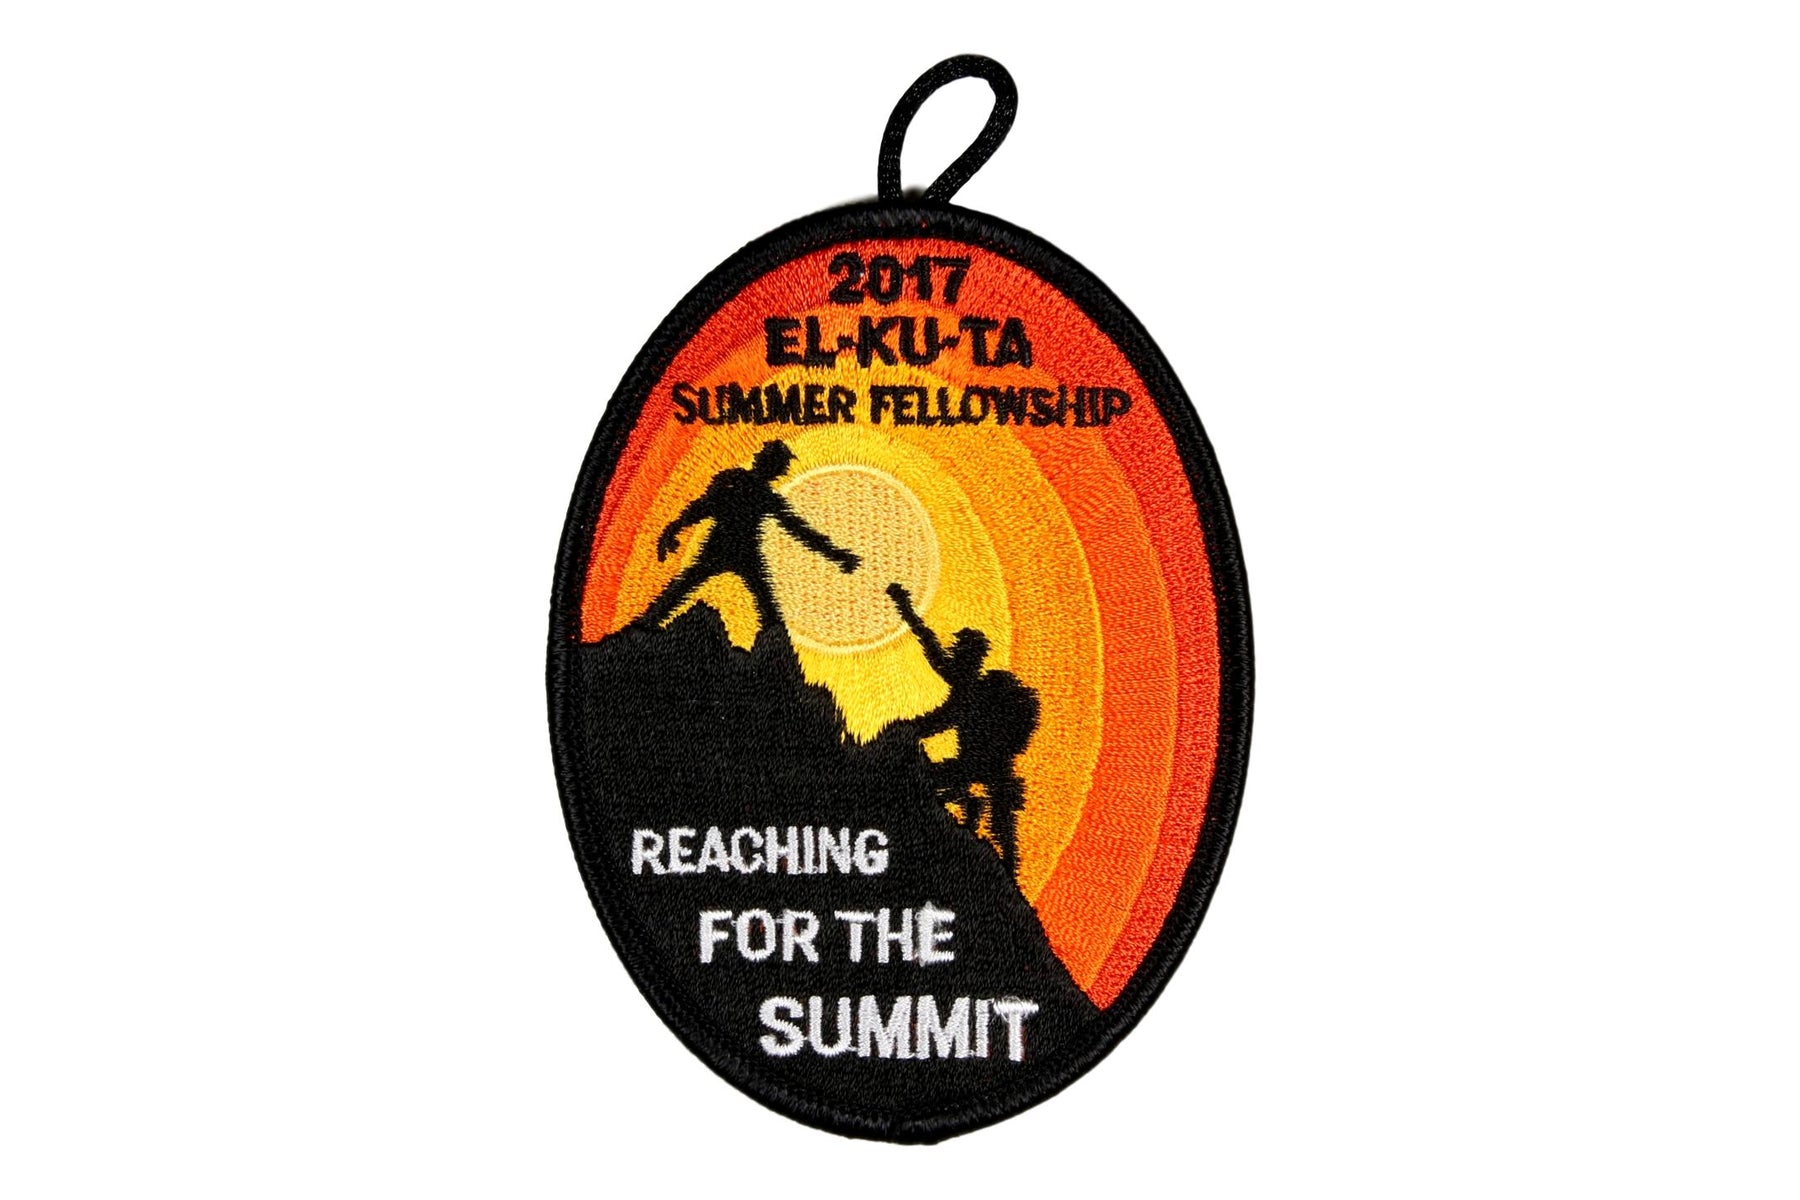 Lodge 520 El-Ku-Ta 2017 Summer Fellowship Patch eX-2017-4